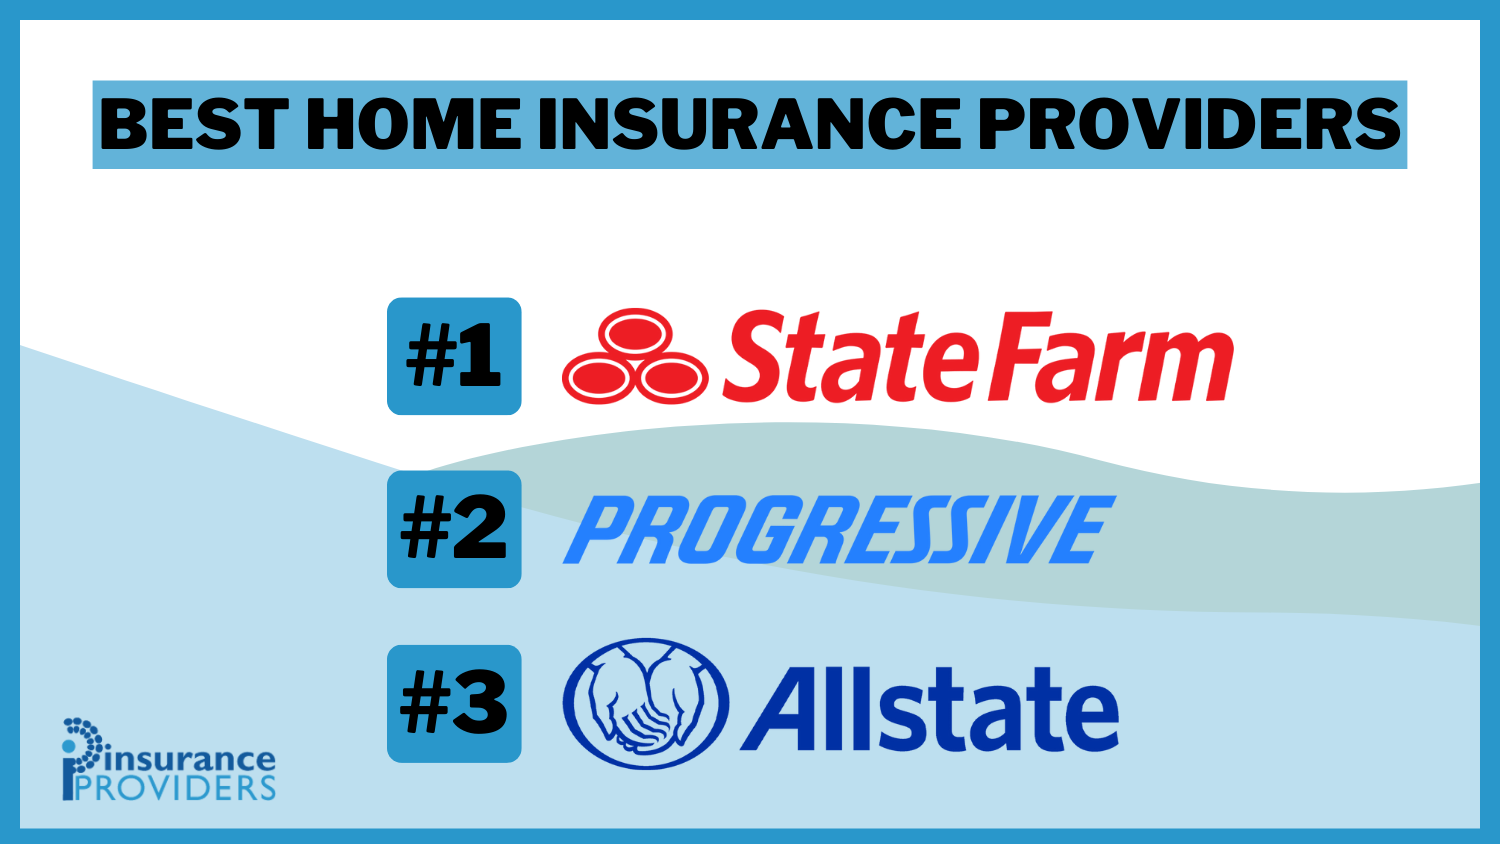 Best Home Insurance Providers: State Farm, Progressive, and Allstate